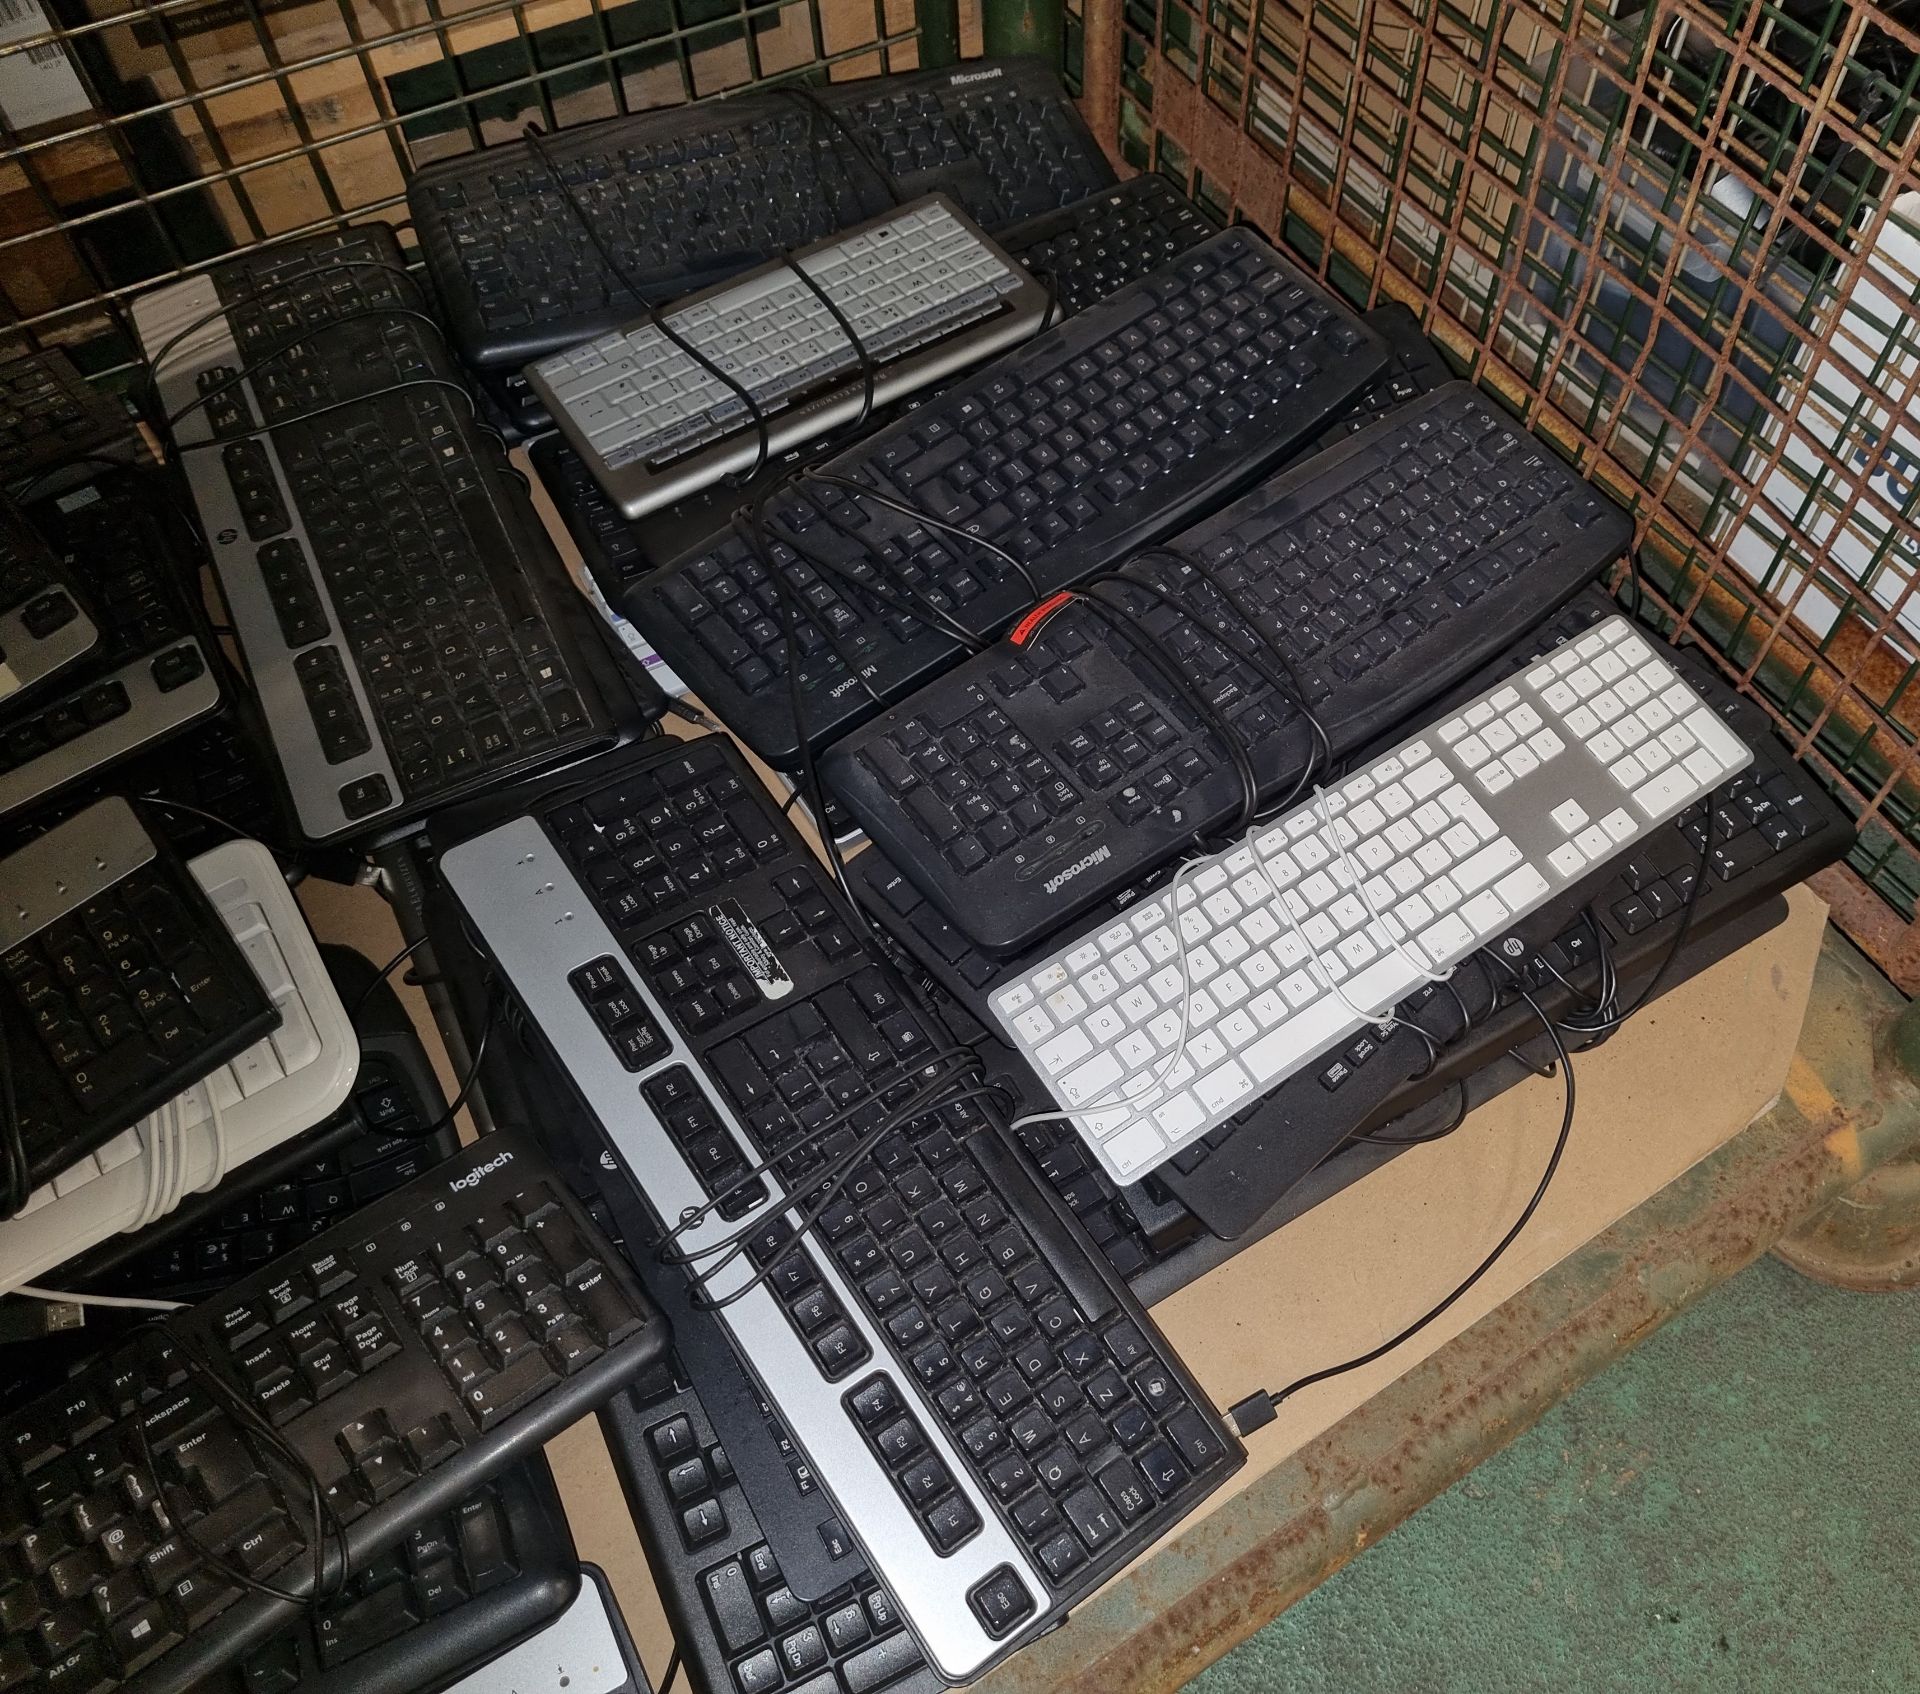 90x computer keyboards of multiple makes - HP, Logitech, Lenovo, Microsoft and Kensington - Bild 5 aus 5